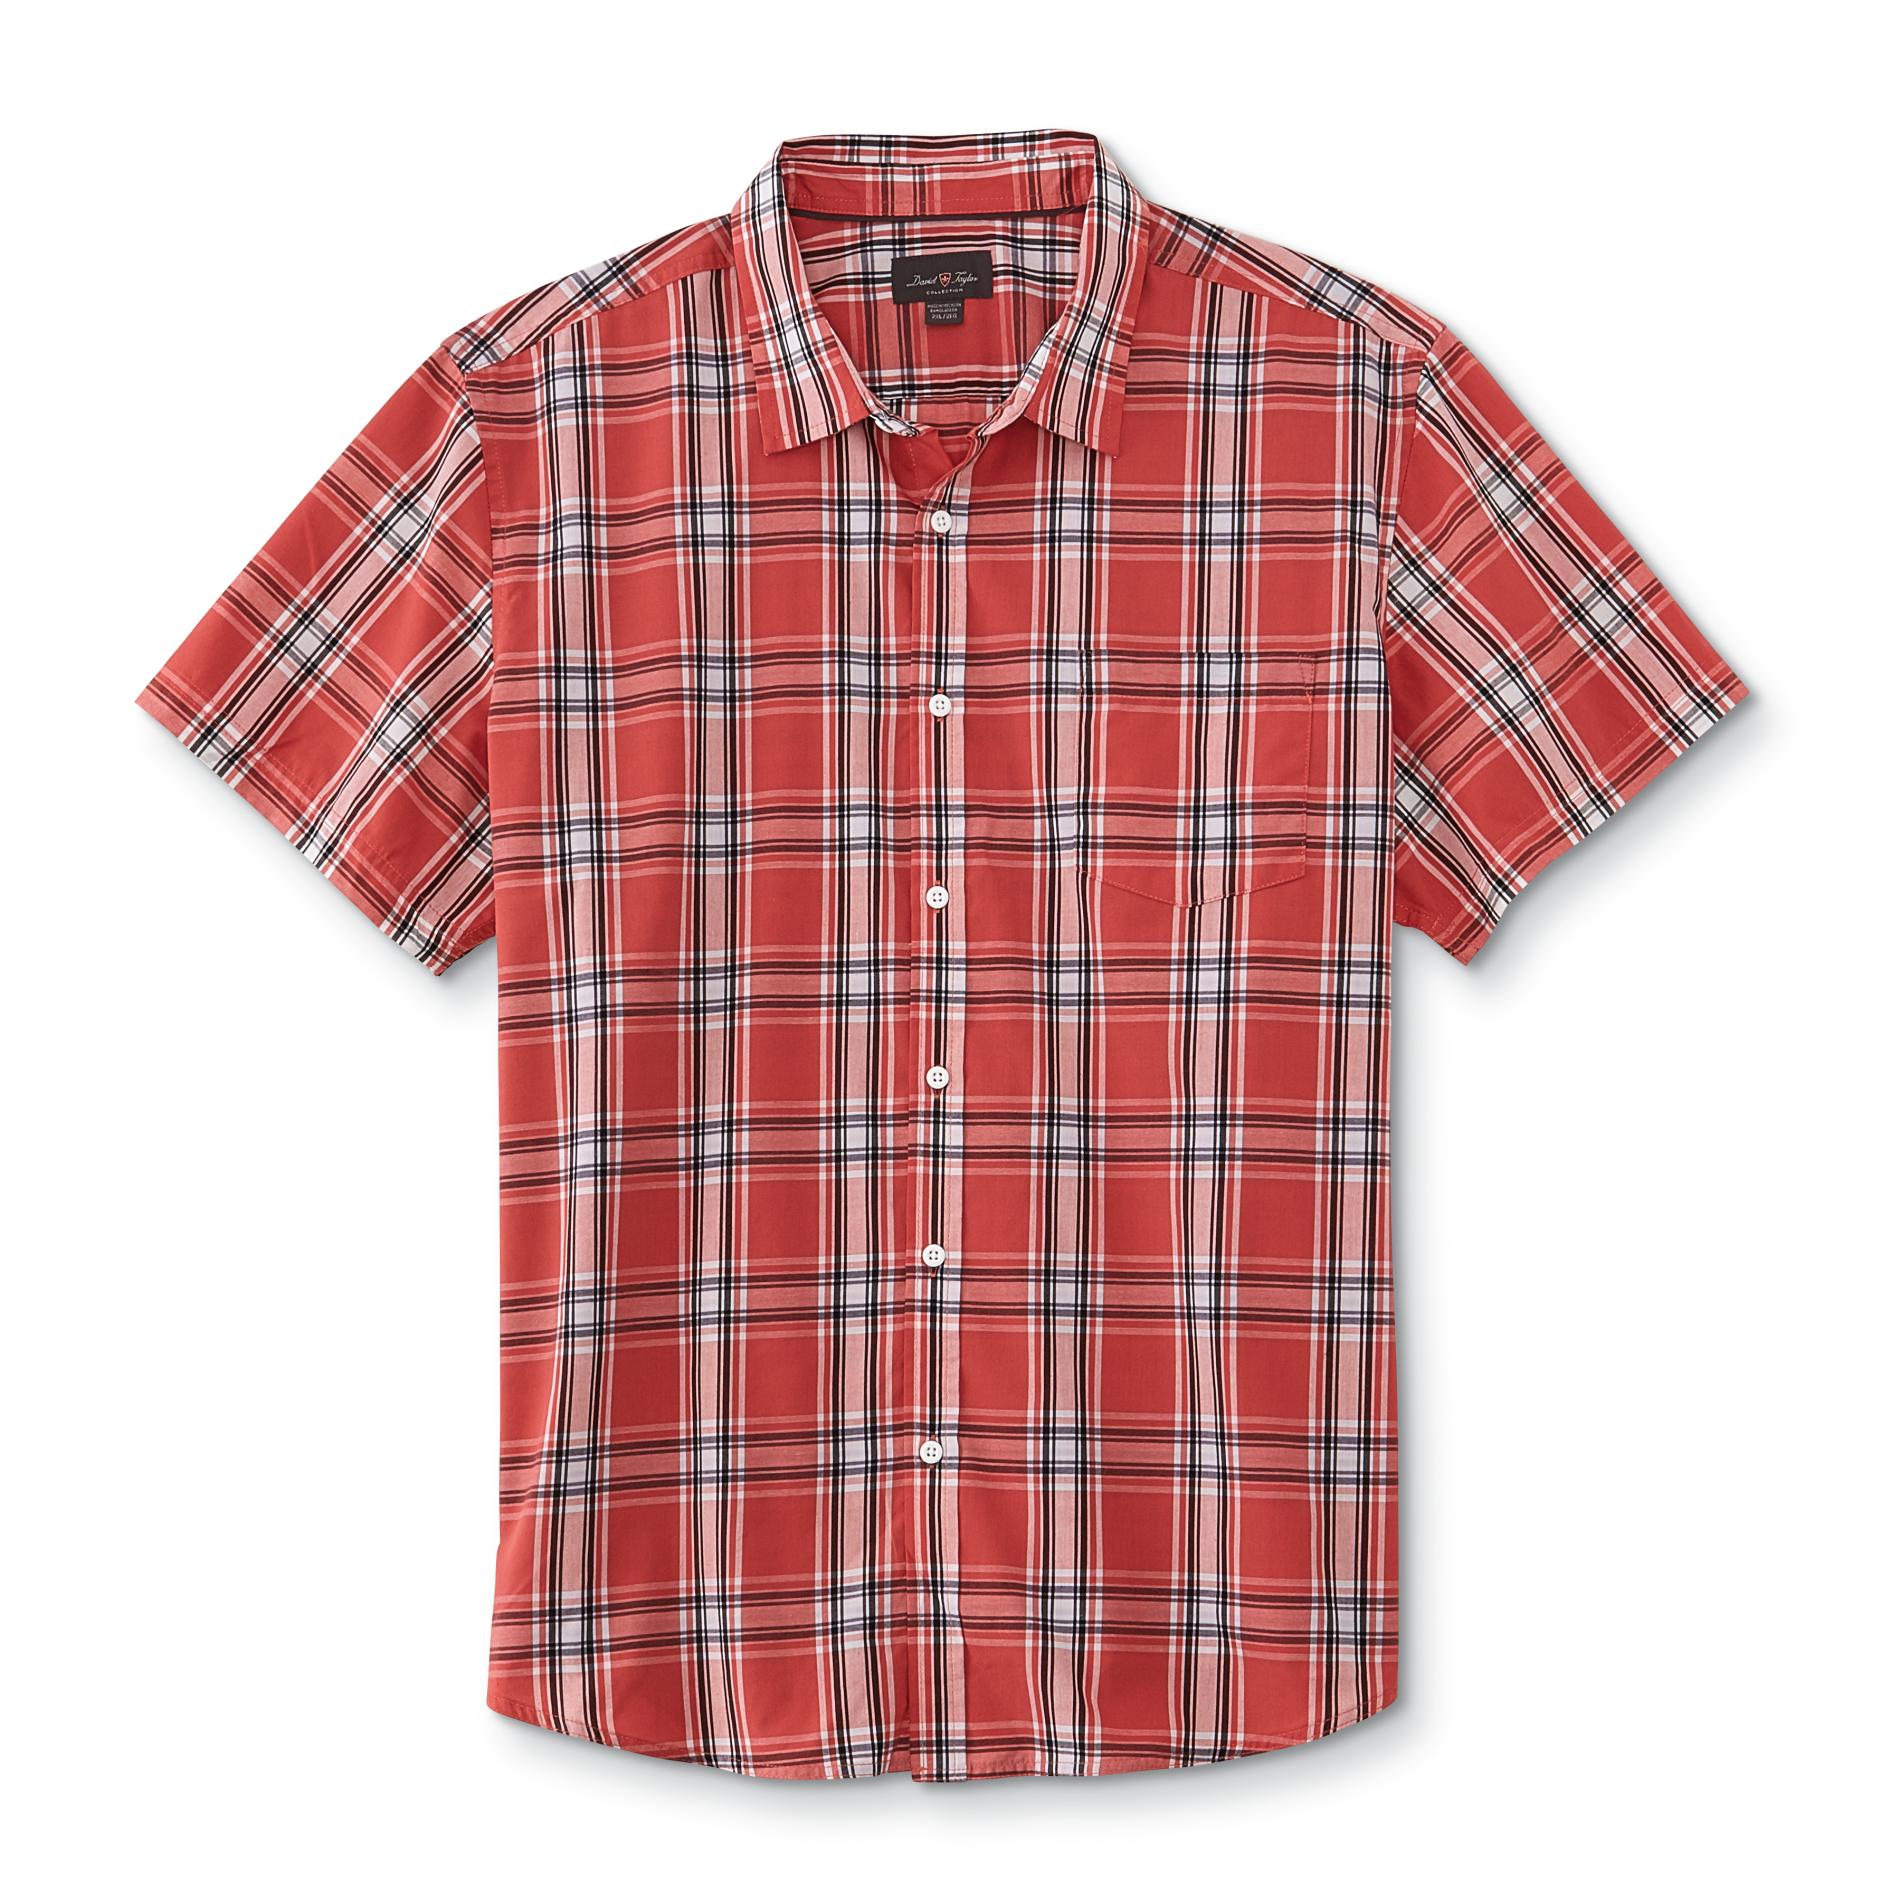 David Taylor Collection Men's Short-Sleeve Oxford Shirt - Plaid